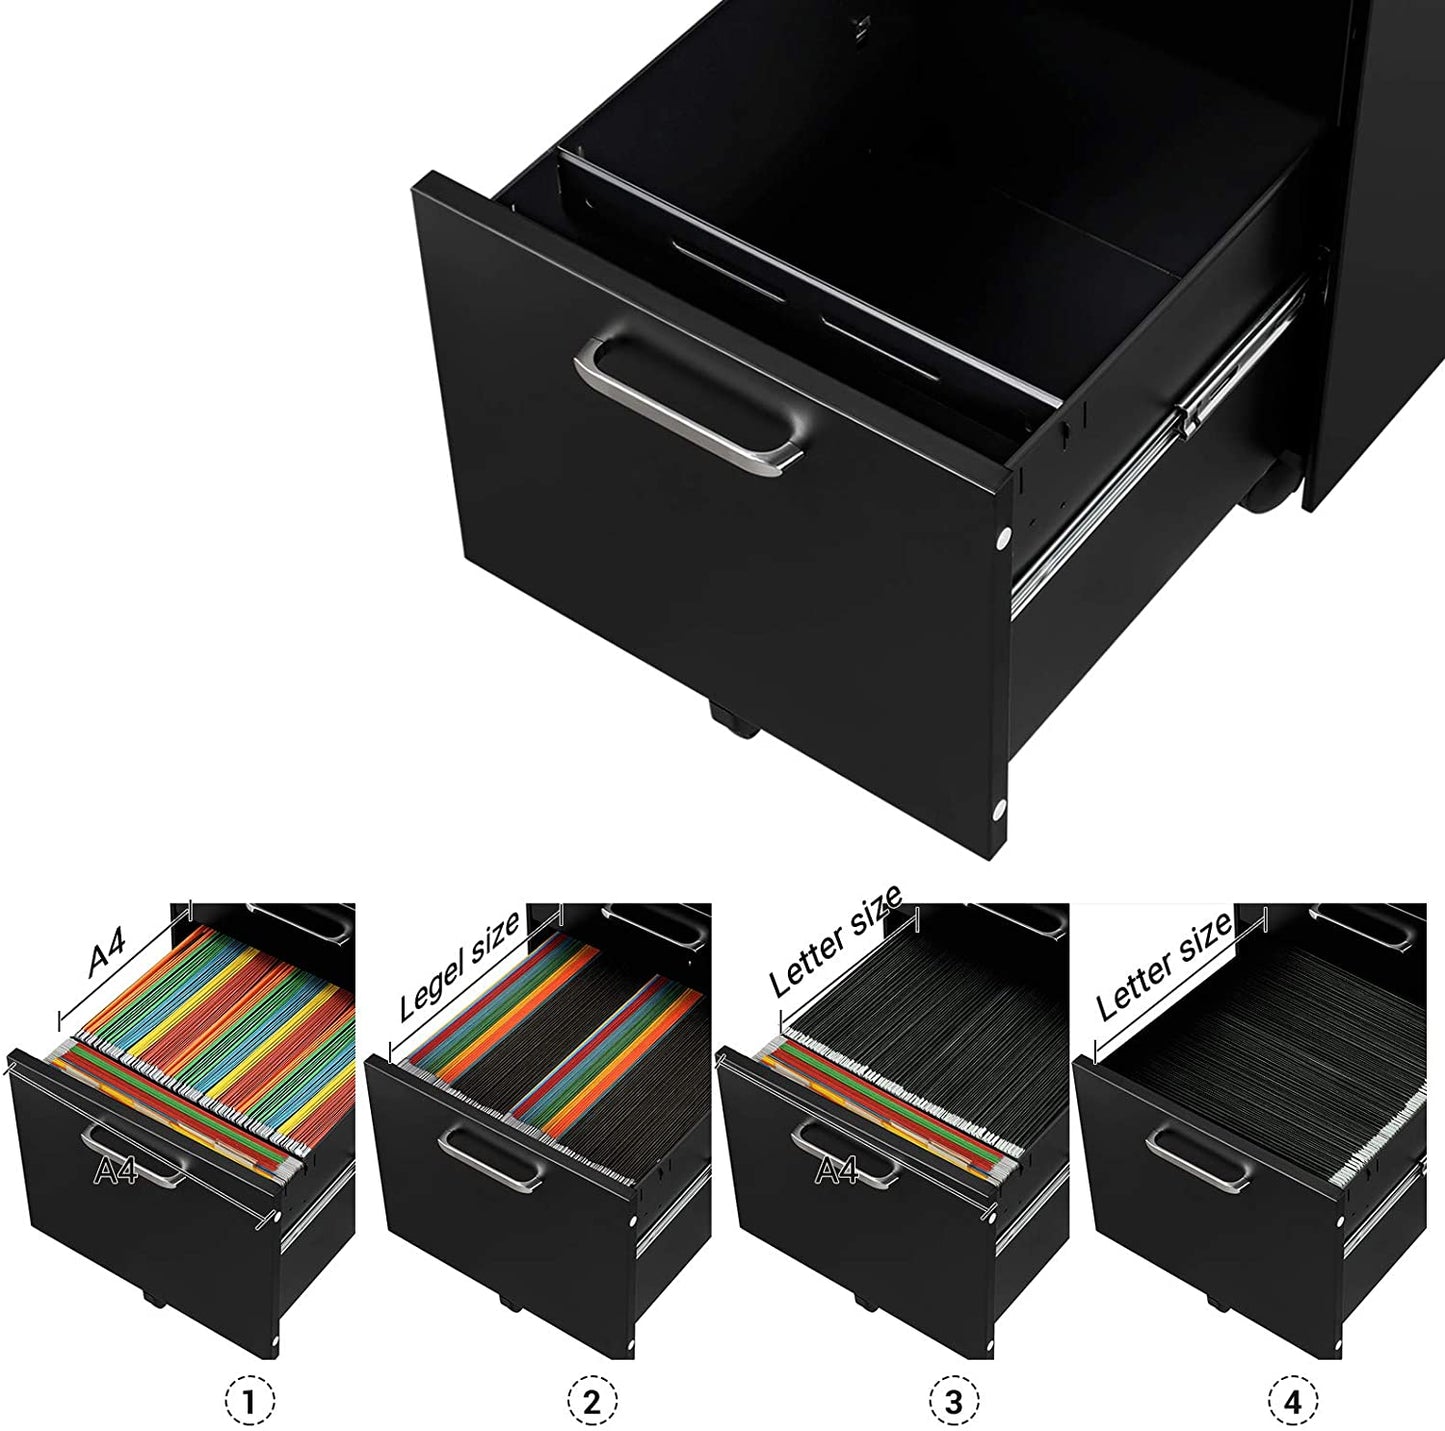 Nancy's Copp Drawer Unit - Filing Cabinet - On Wheels - 3 Drawers - Files - Documents - Steel - Black - 39 x 48 x 60 cm 